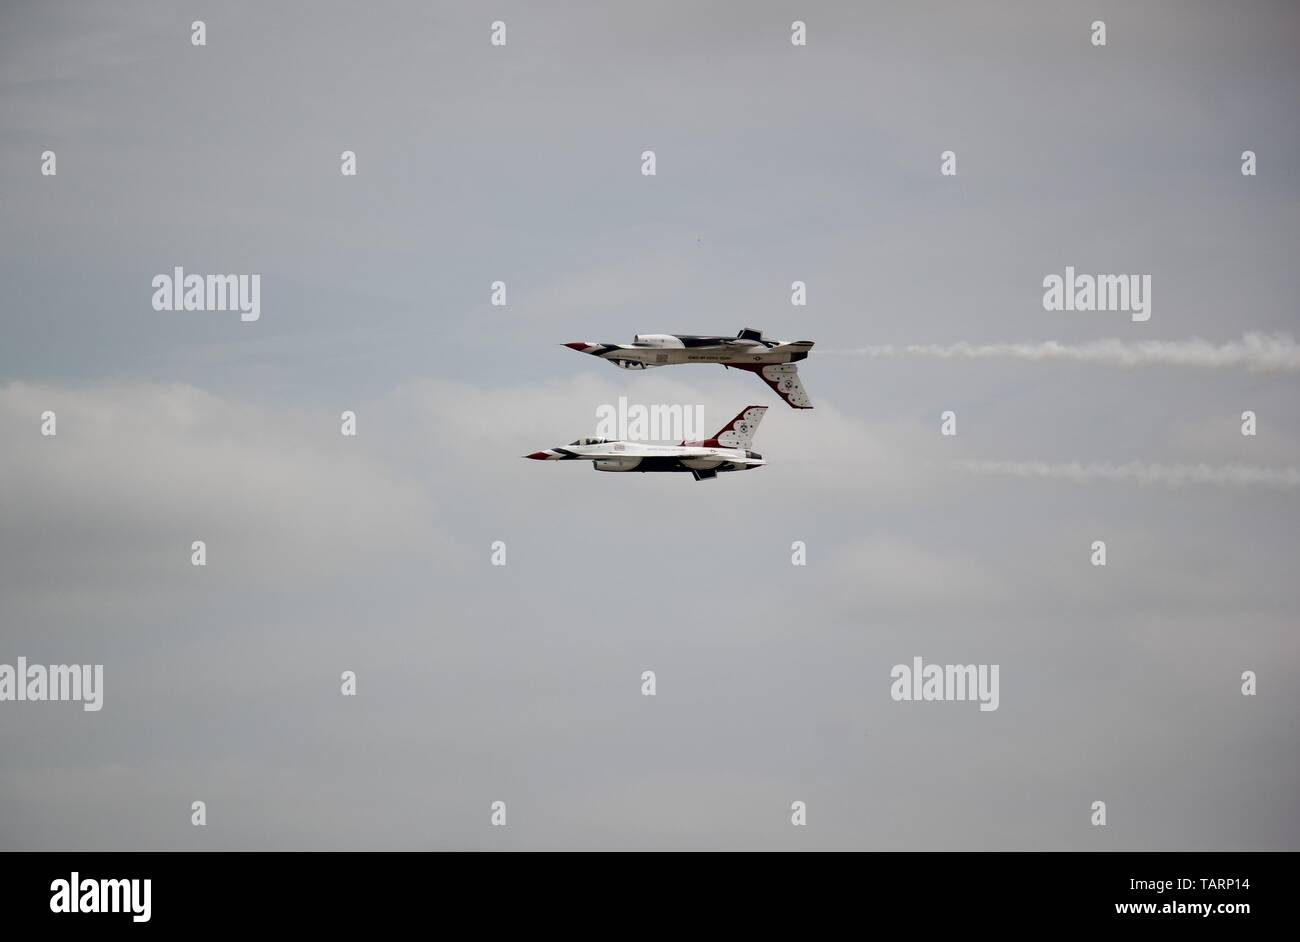 U.S. Air force Thunderbirds performing at the 2019 air expo at JBA in Maryland. Stock Photo